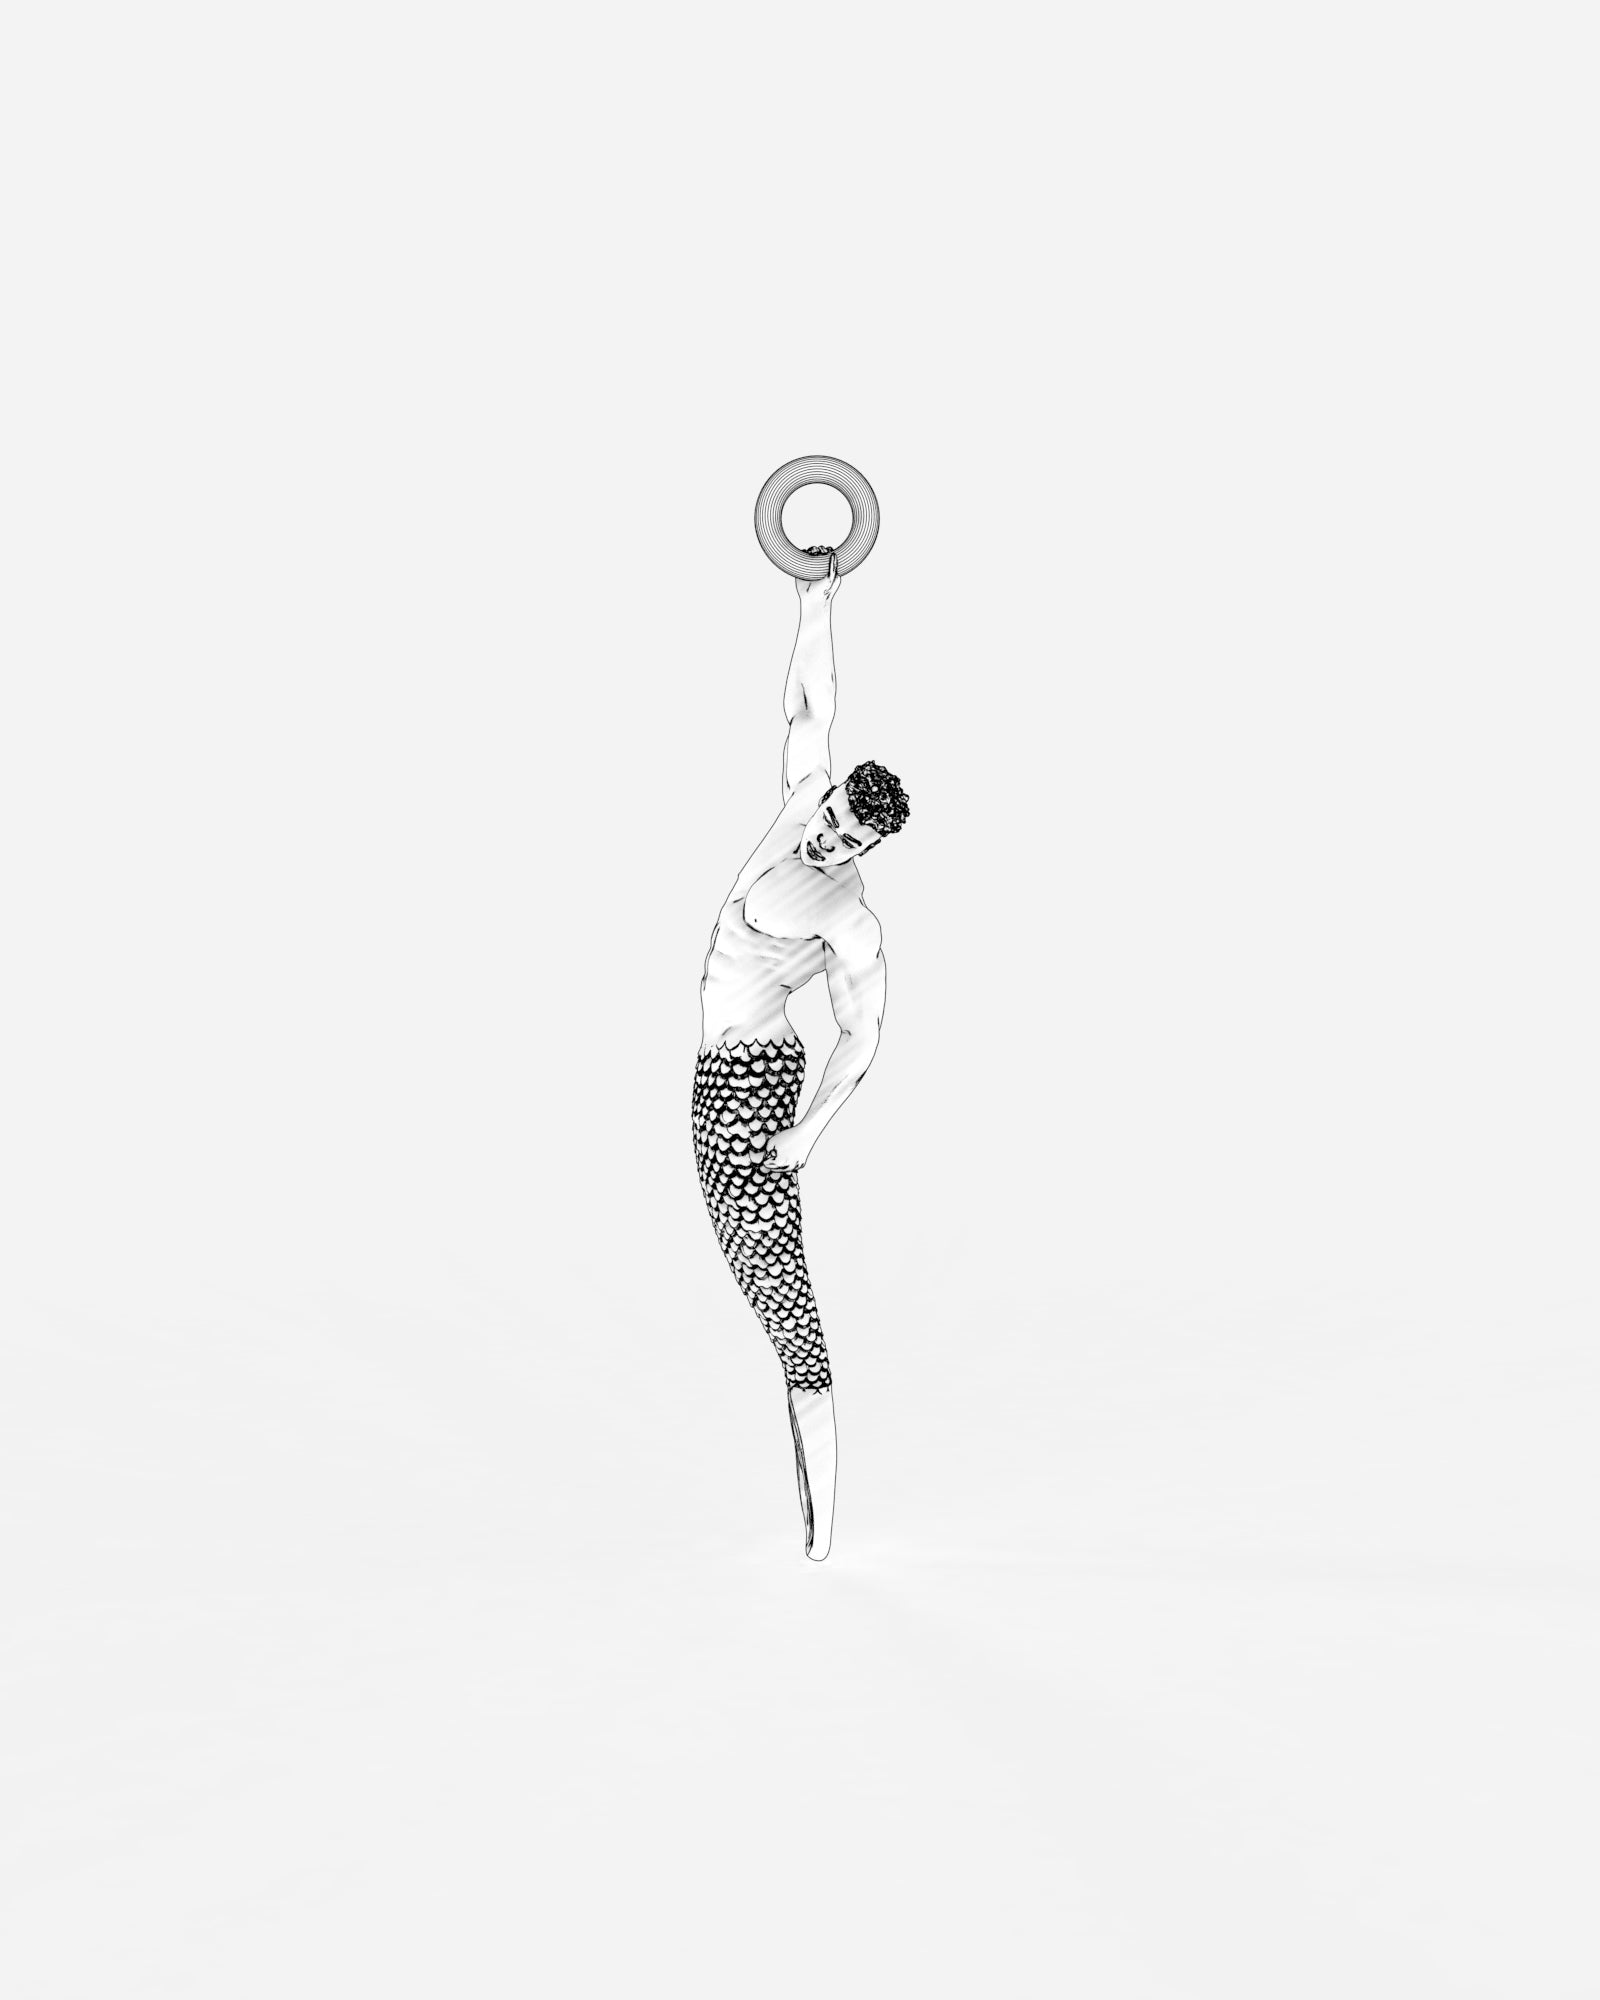 Hanging Merman Single Earring in Sterling Silver by Wilson Grant